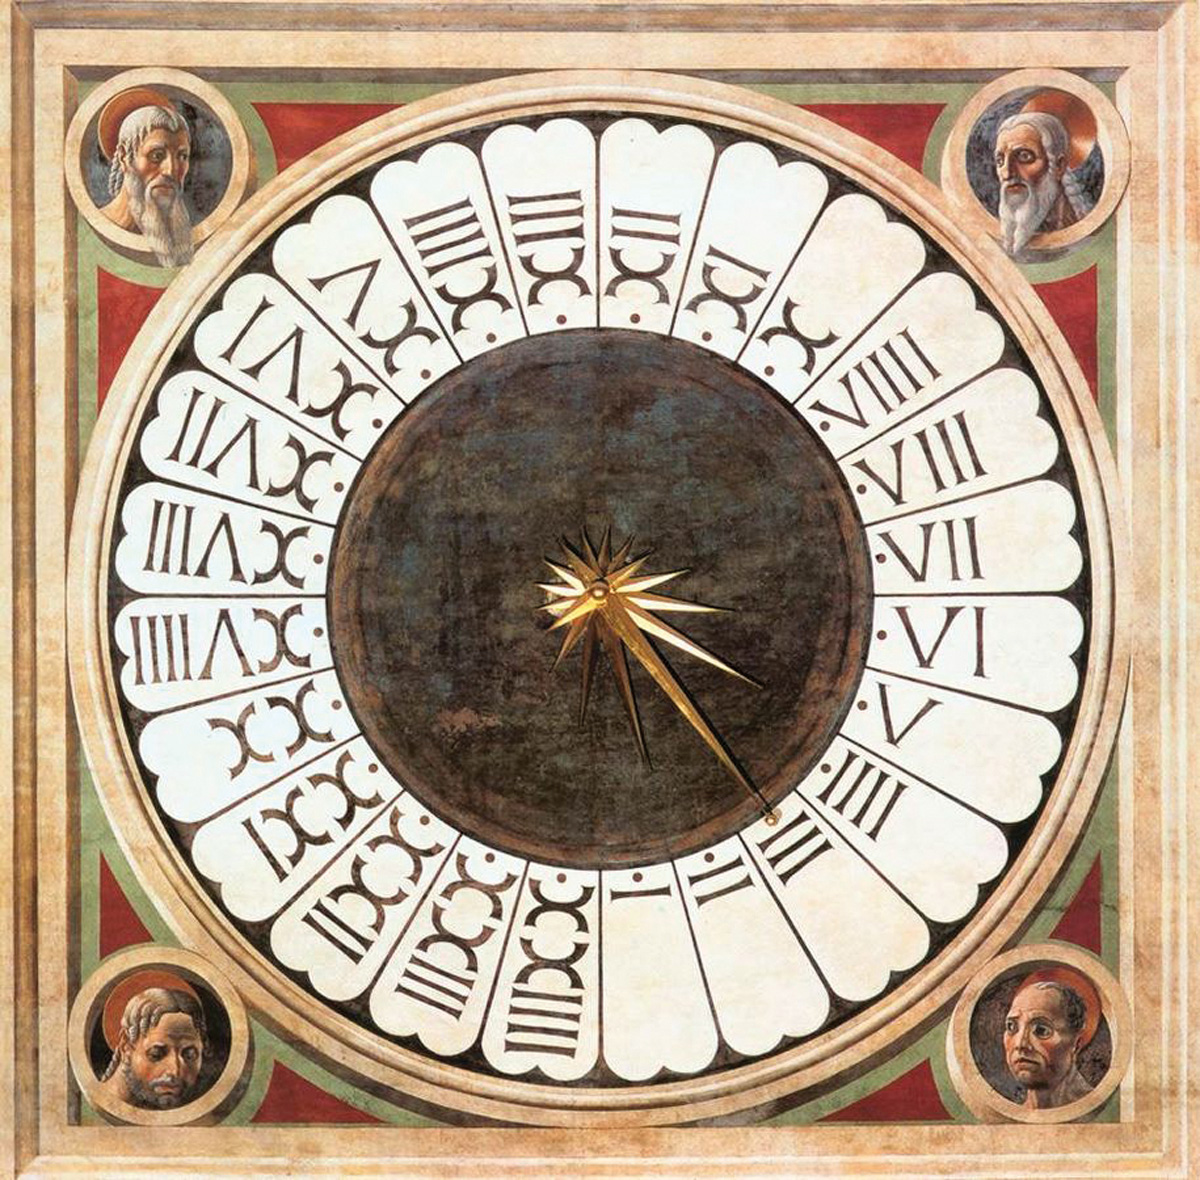 The Duomo clock